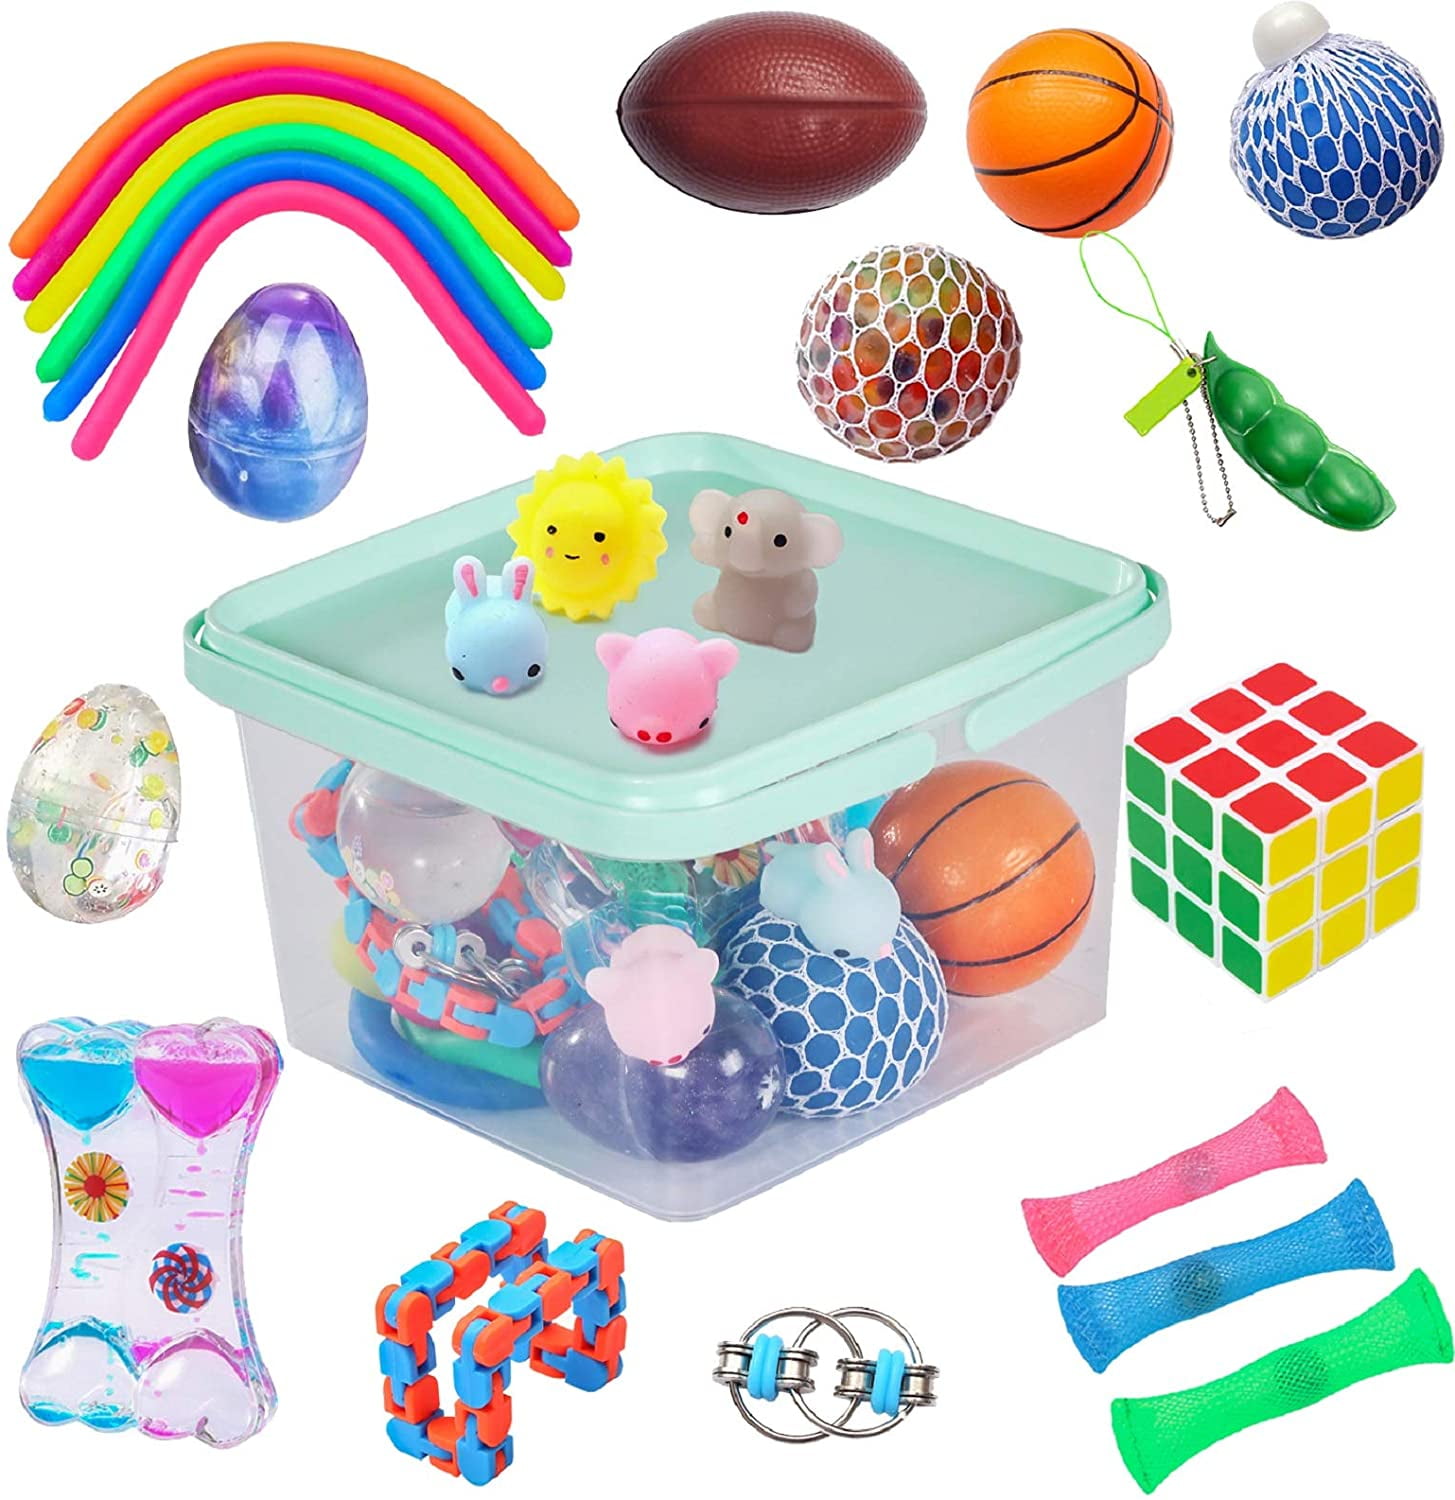 Details about   Rainbow Sensory Fidget Toys Stress Relief Silent Autism Classroom Educational US 